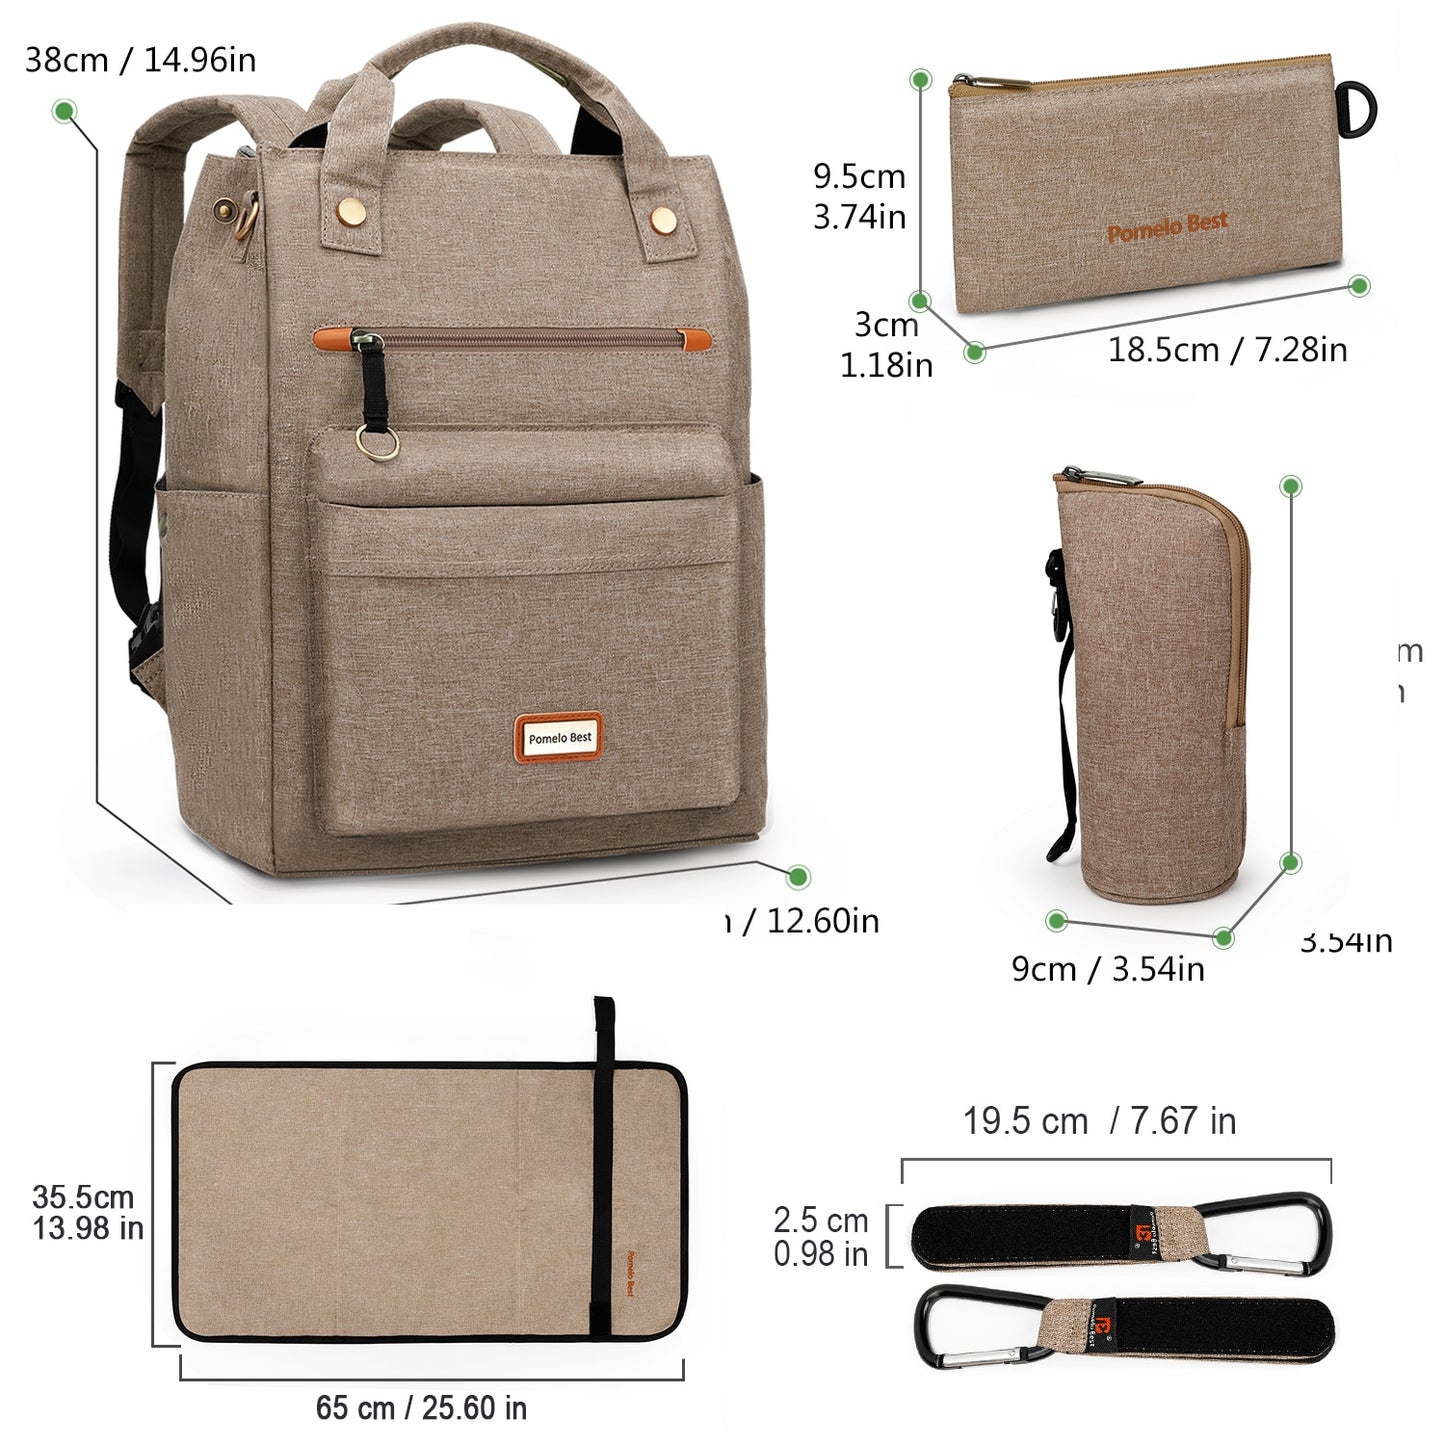 Versatile Diaper Bag Backpack with Hidden Shoulder Straps and Tons of Pockets